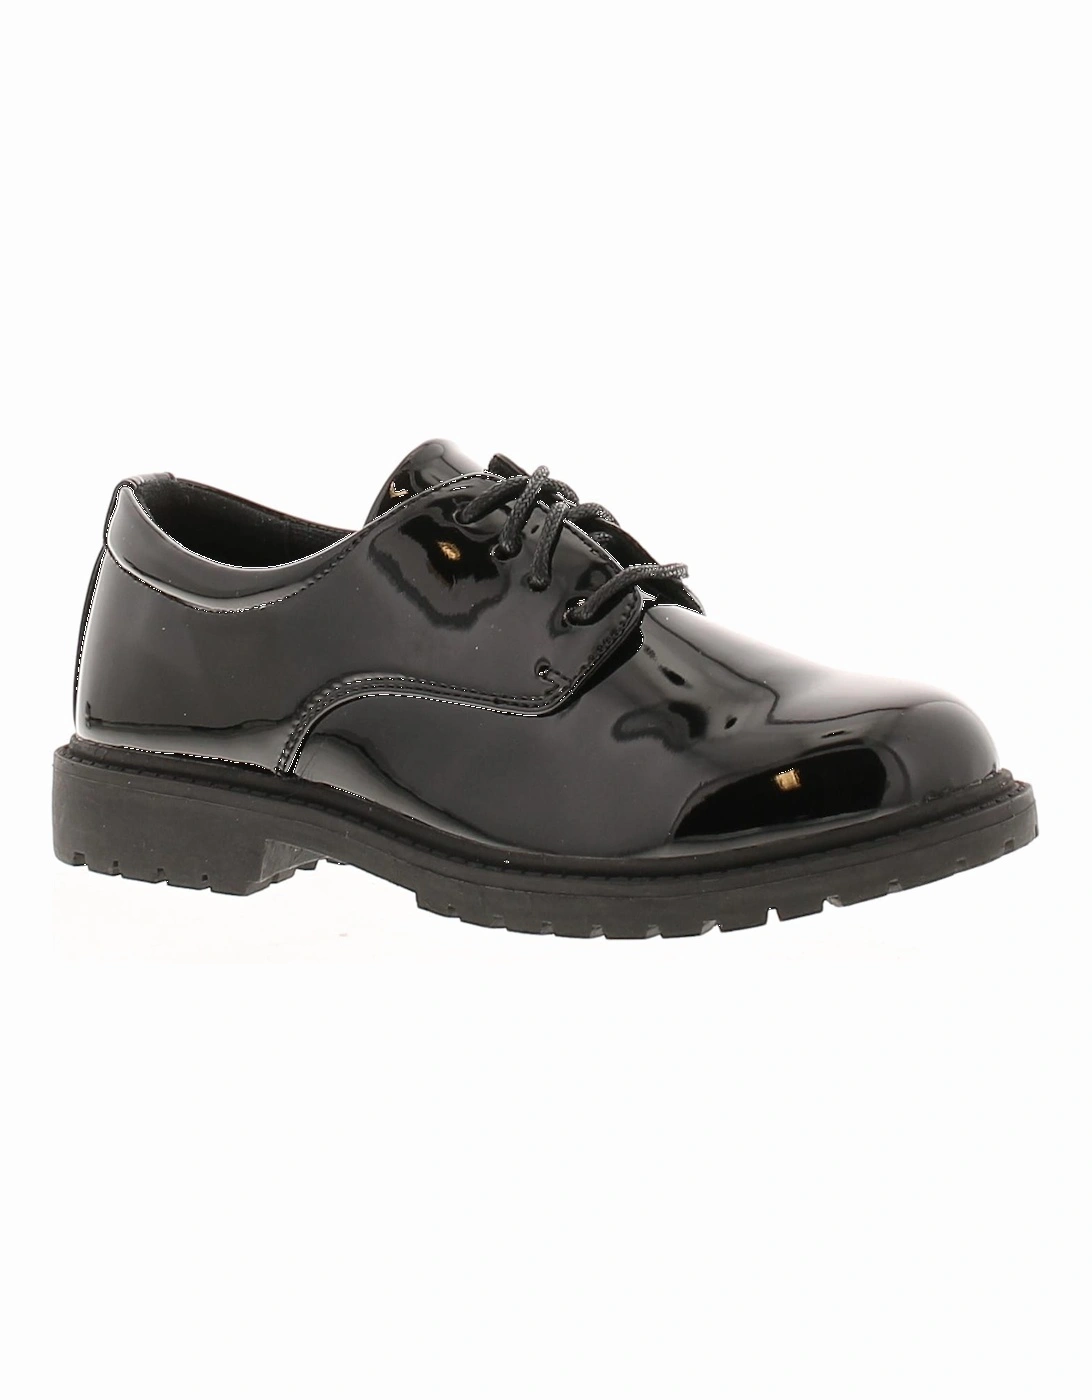 Girls Shoes School Older Molly black UK Size, 6 of 5